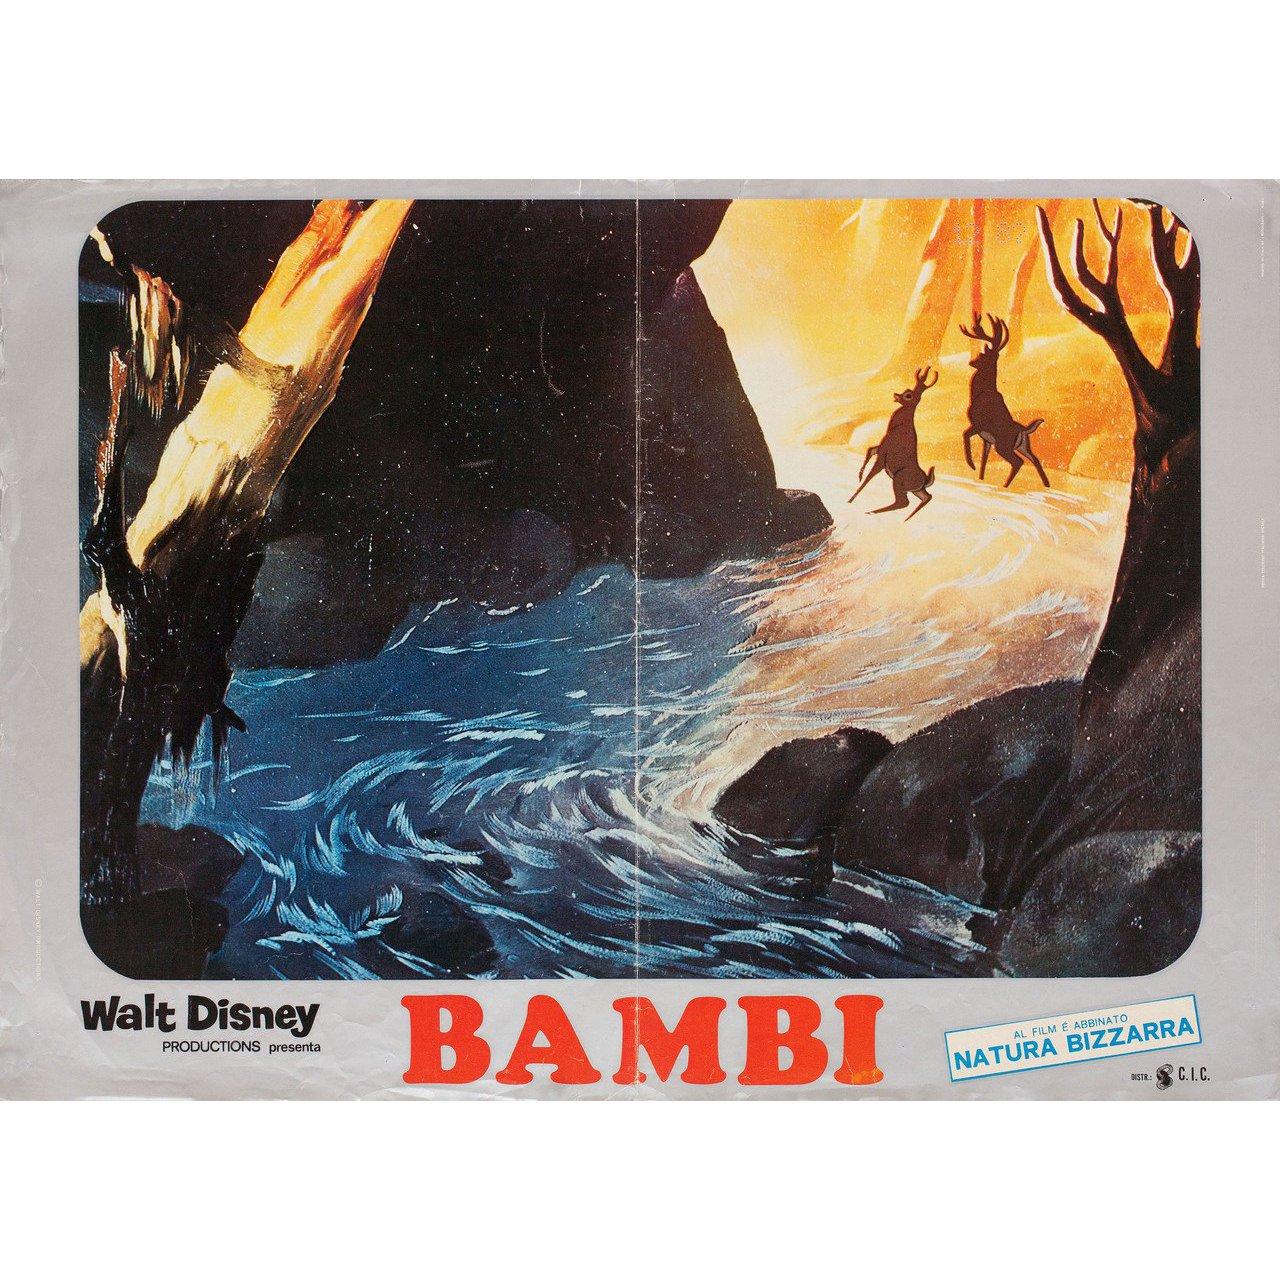 Bambi R1970s Italian Fotobusta Film Poster In Fair Condition In New York, NY